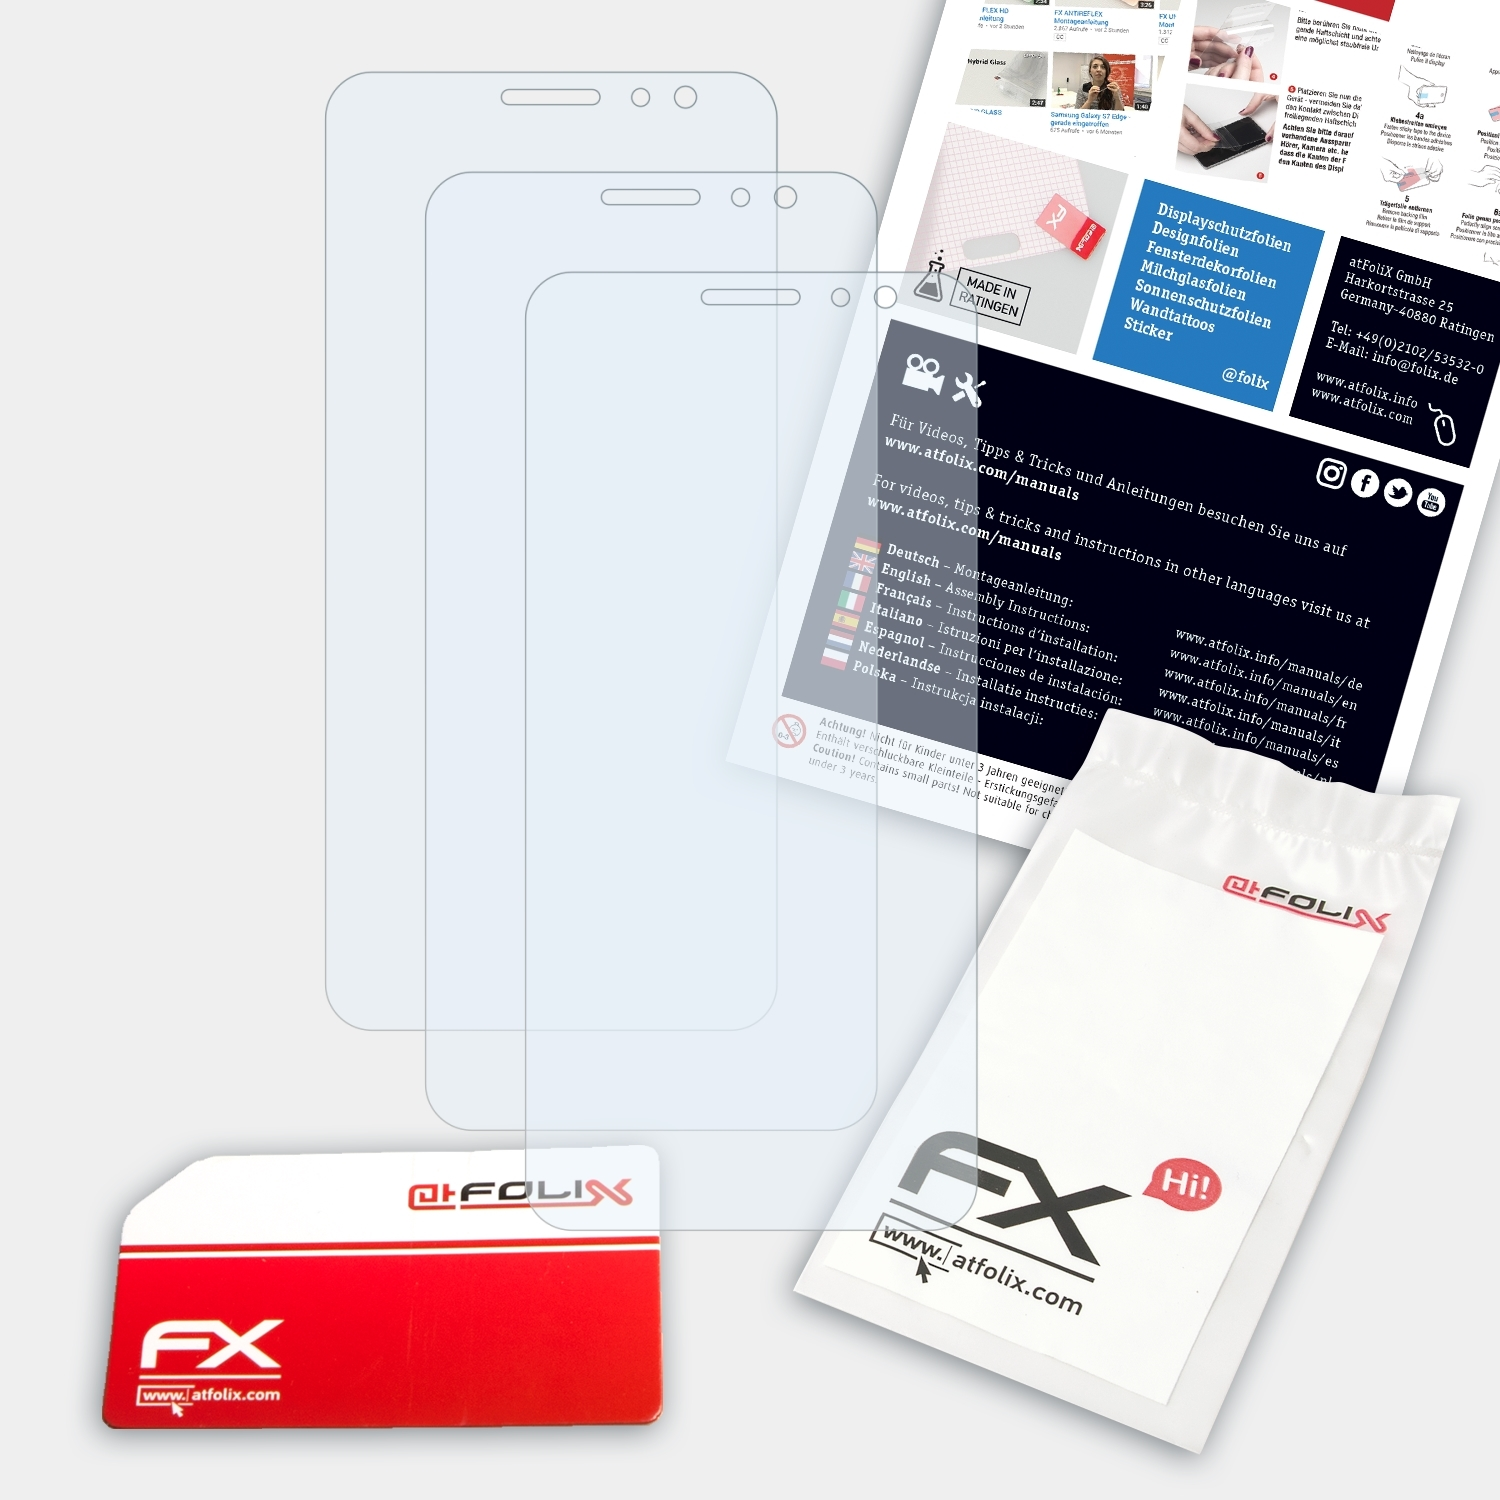 Plus) FX-Clear Displayschutz(für 3x Nova ATFOLIX Huawei